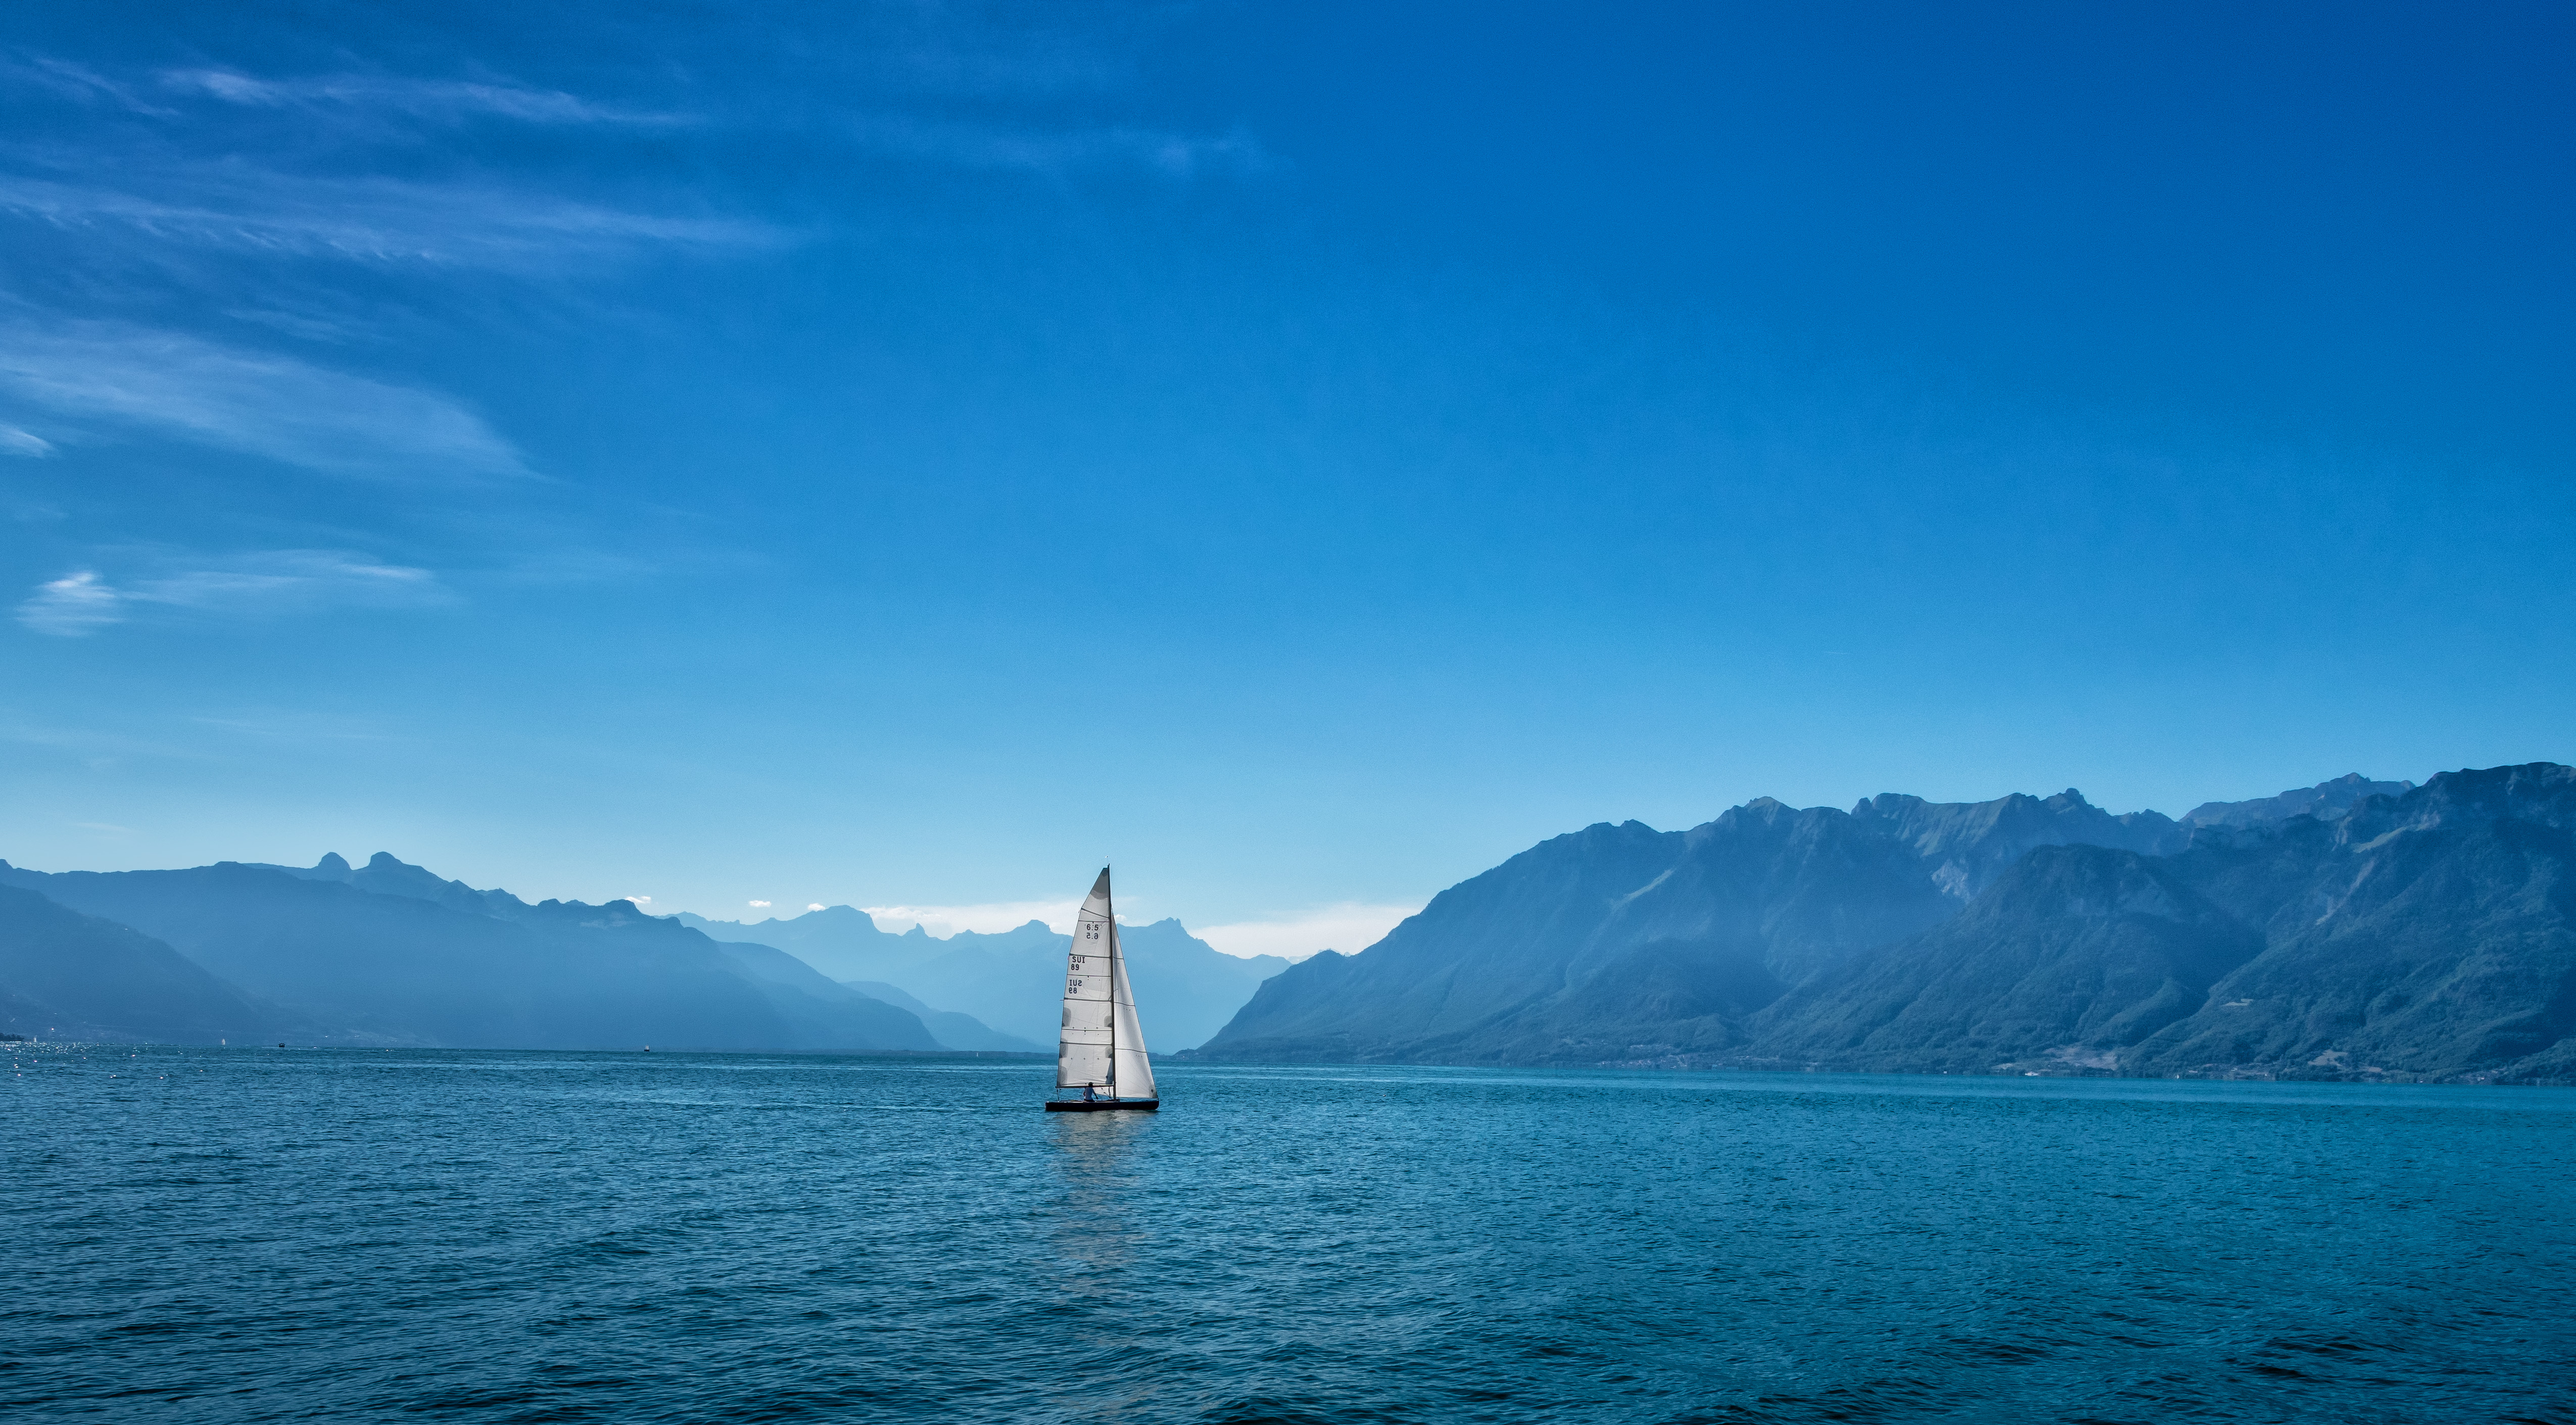 nature, mountains, sailboat, sea, sailfish, ship images